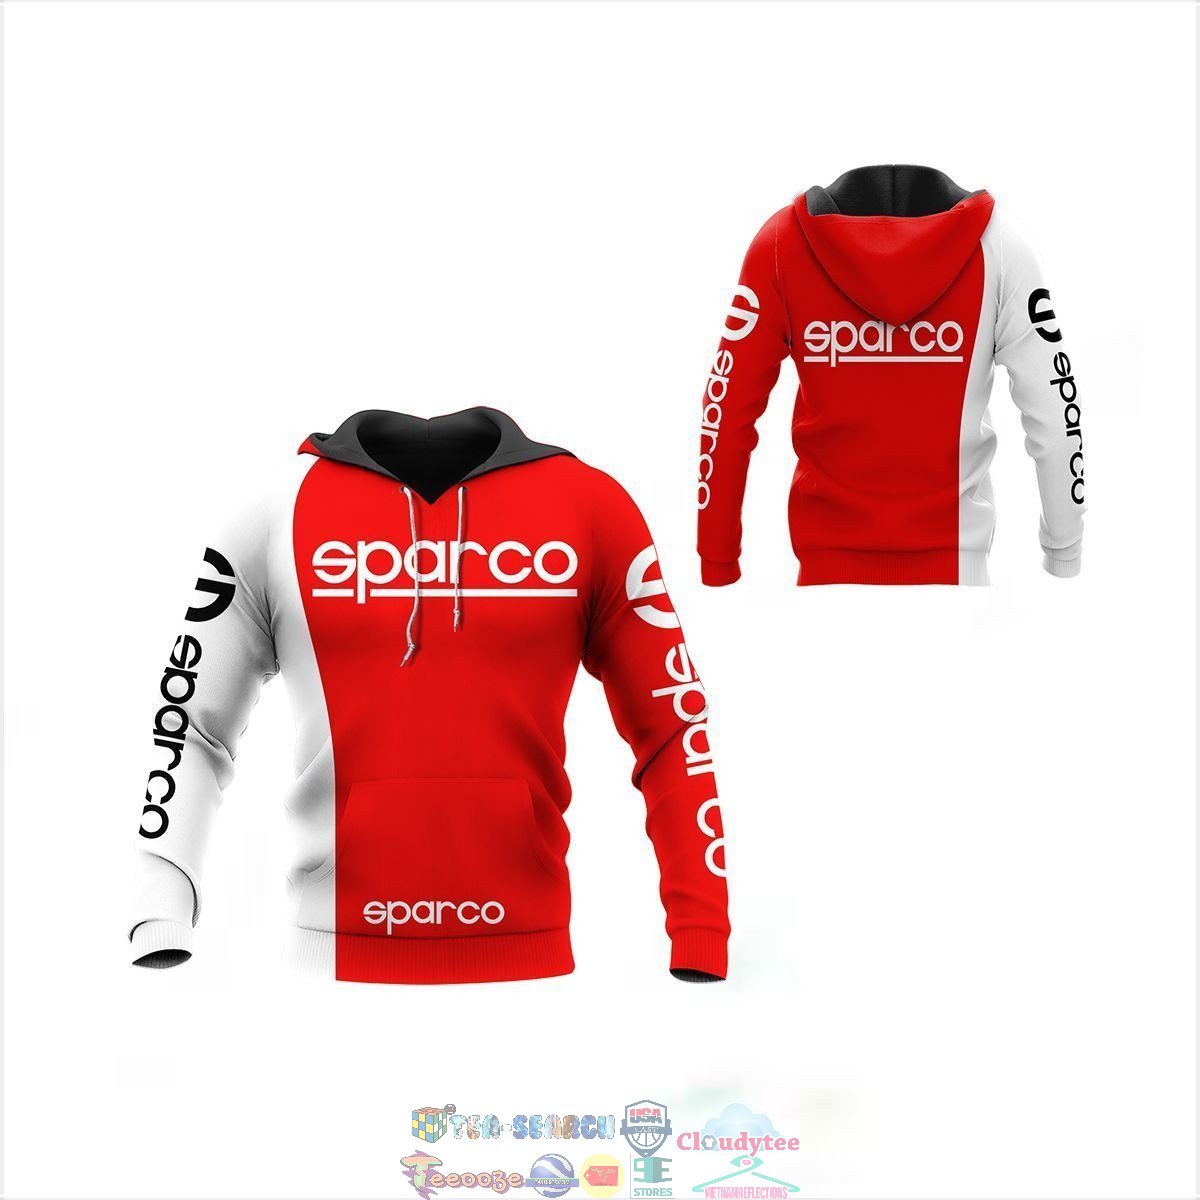 BpbPIXwA-TH080822-35xxxSparco-ver-40-3D-hoodie-and-t-shirt3.jpg